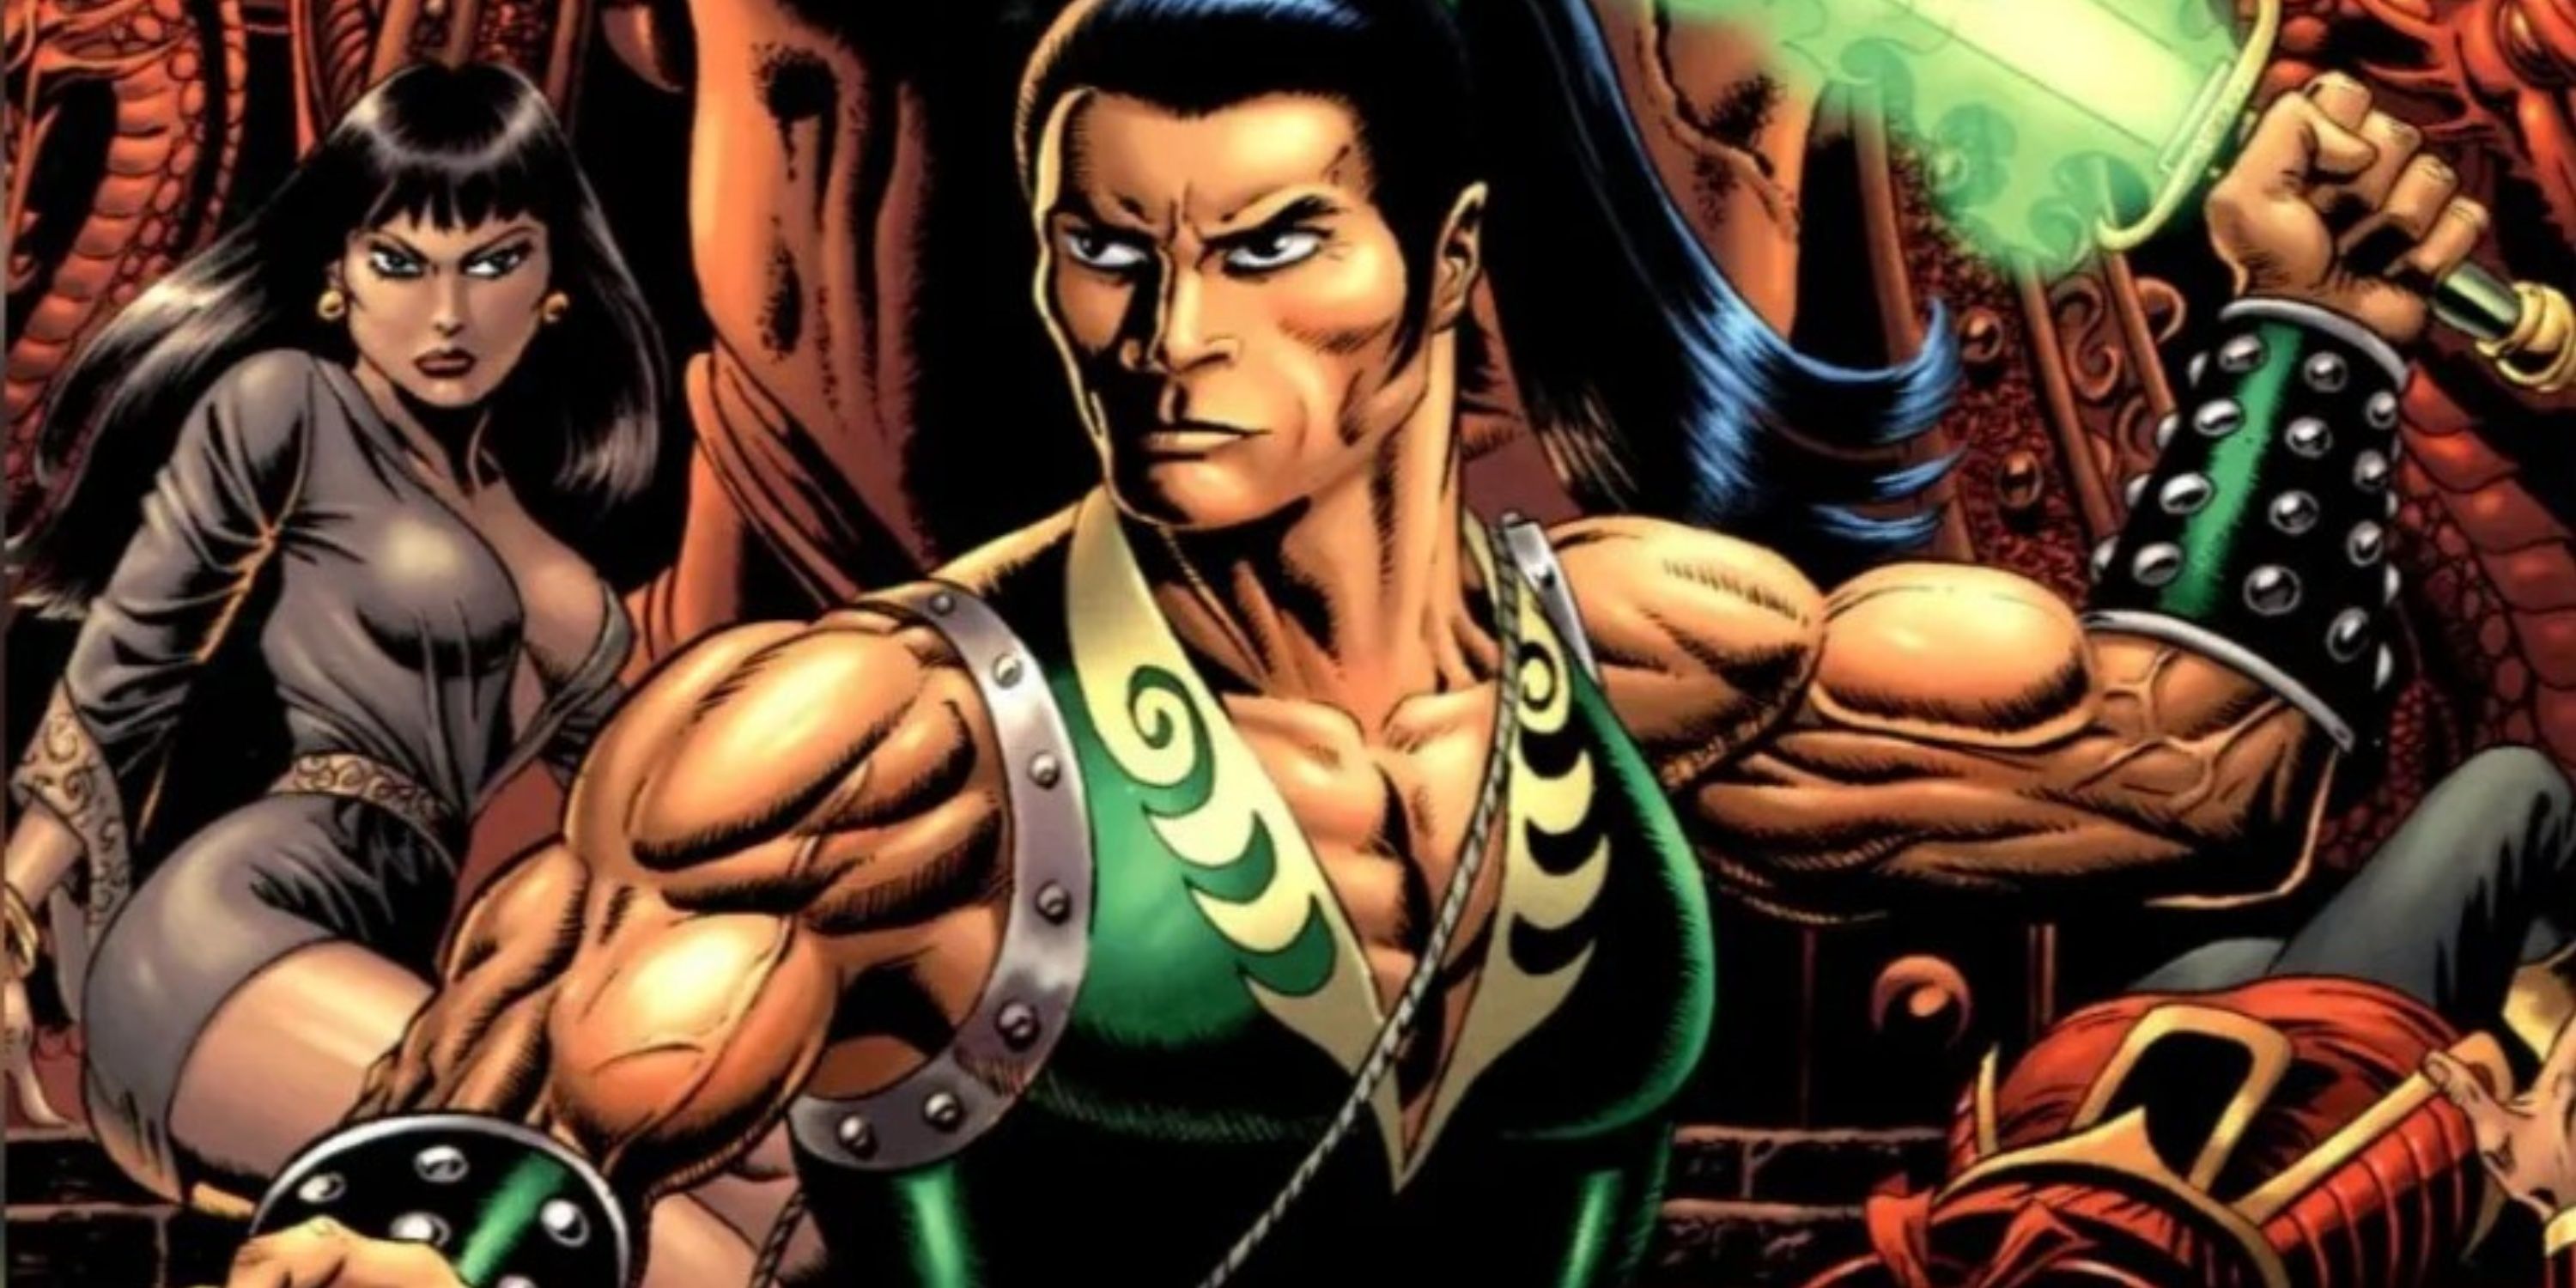 Jong Li holds a glowing green sword in Green Lantern Dragon Lord